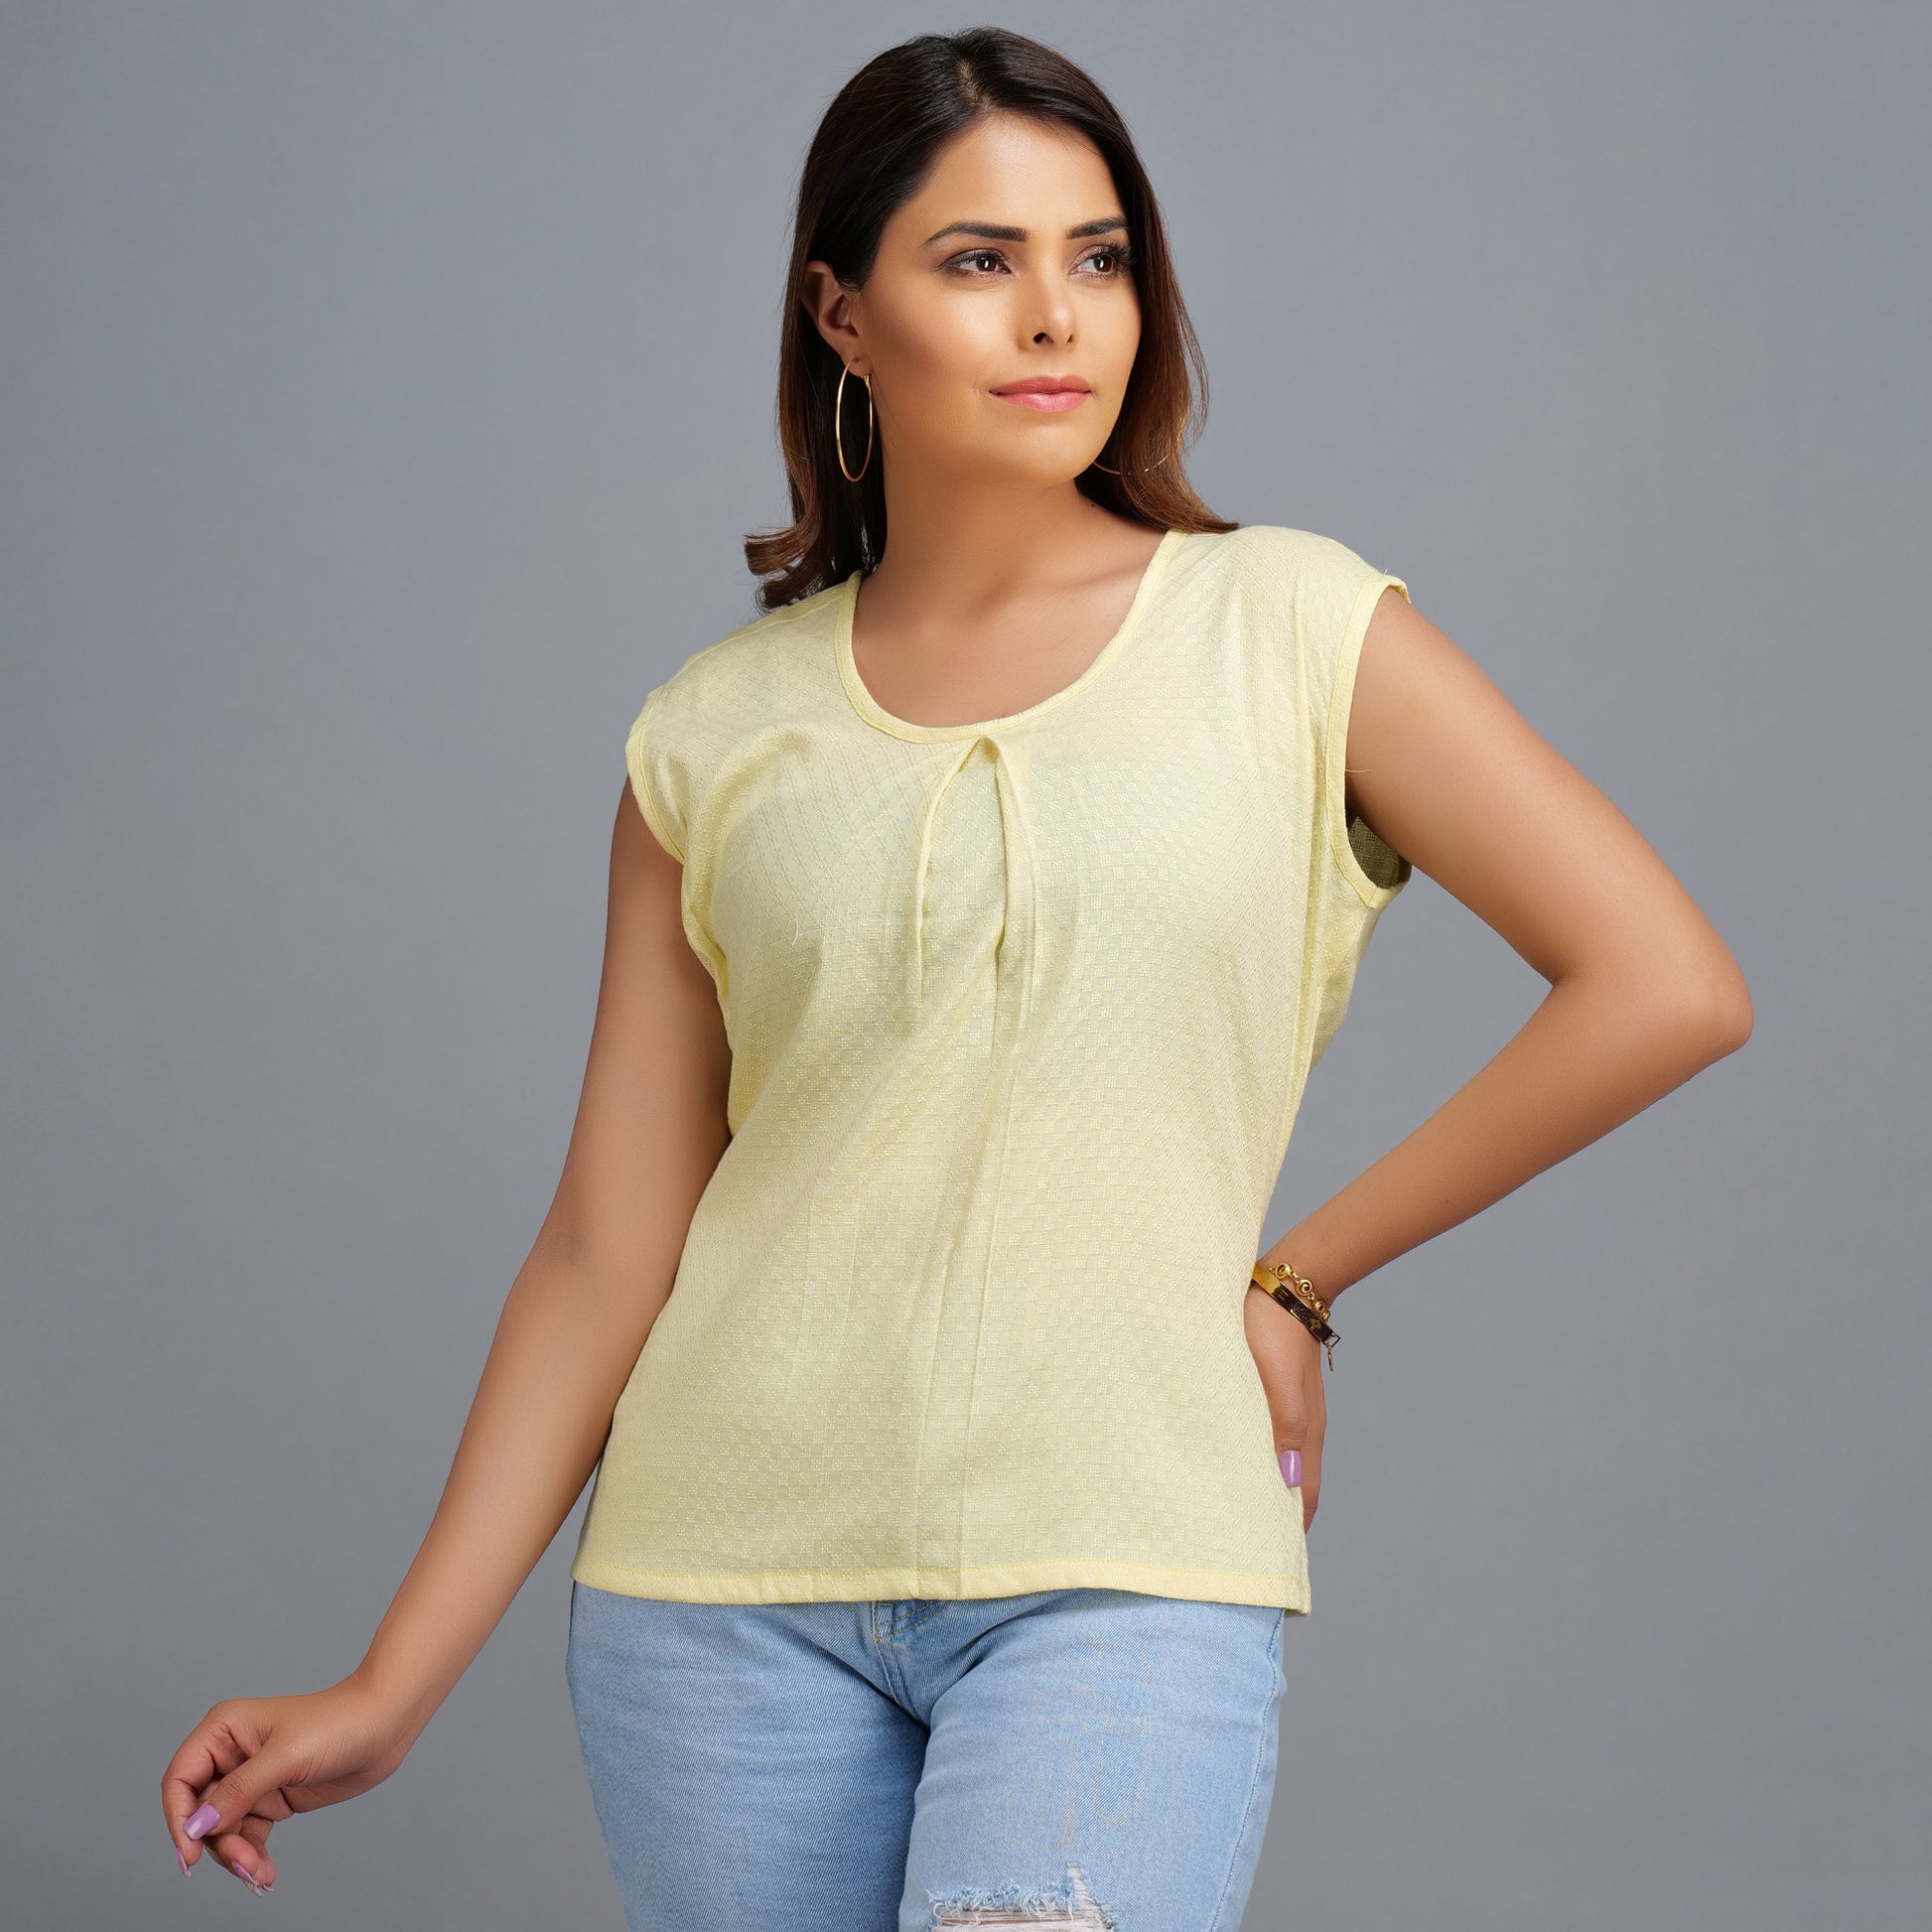 Yellow Sleeveless Cotton Tops for Women